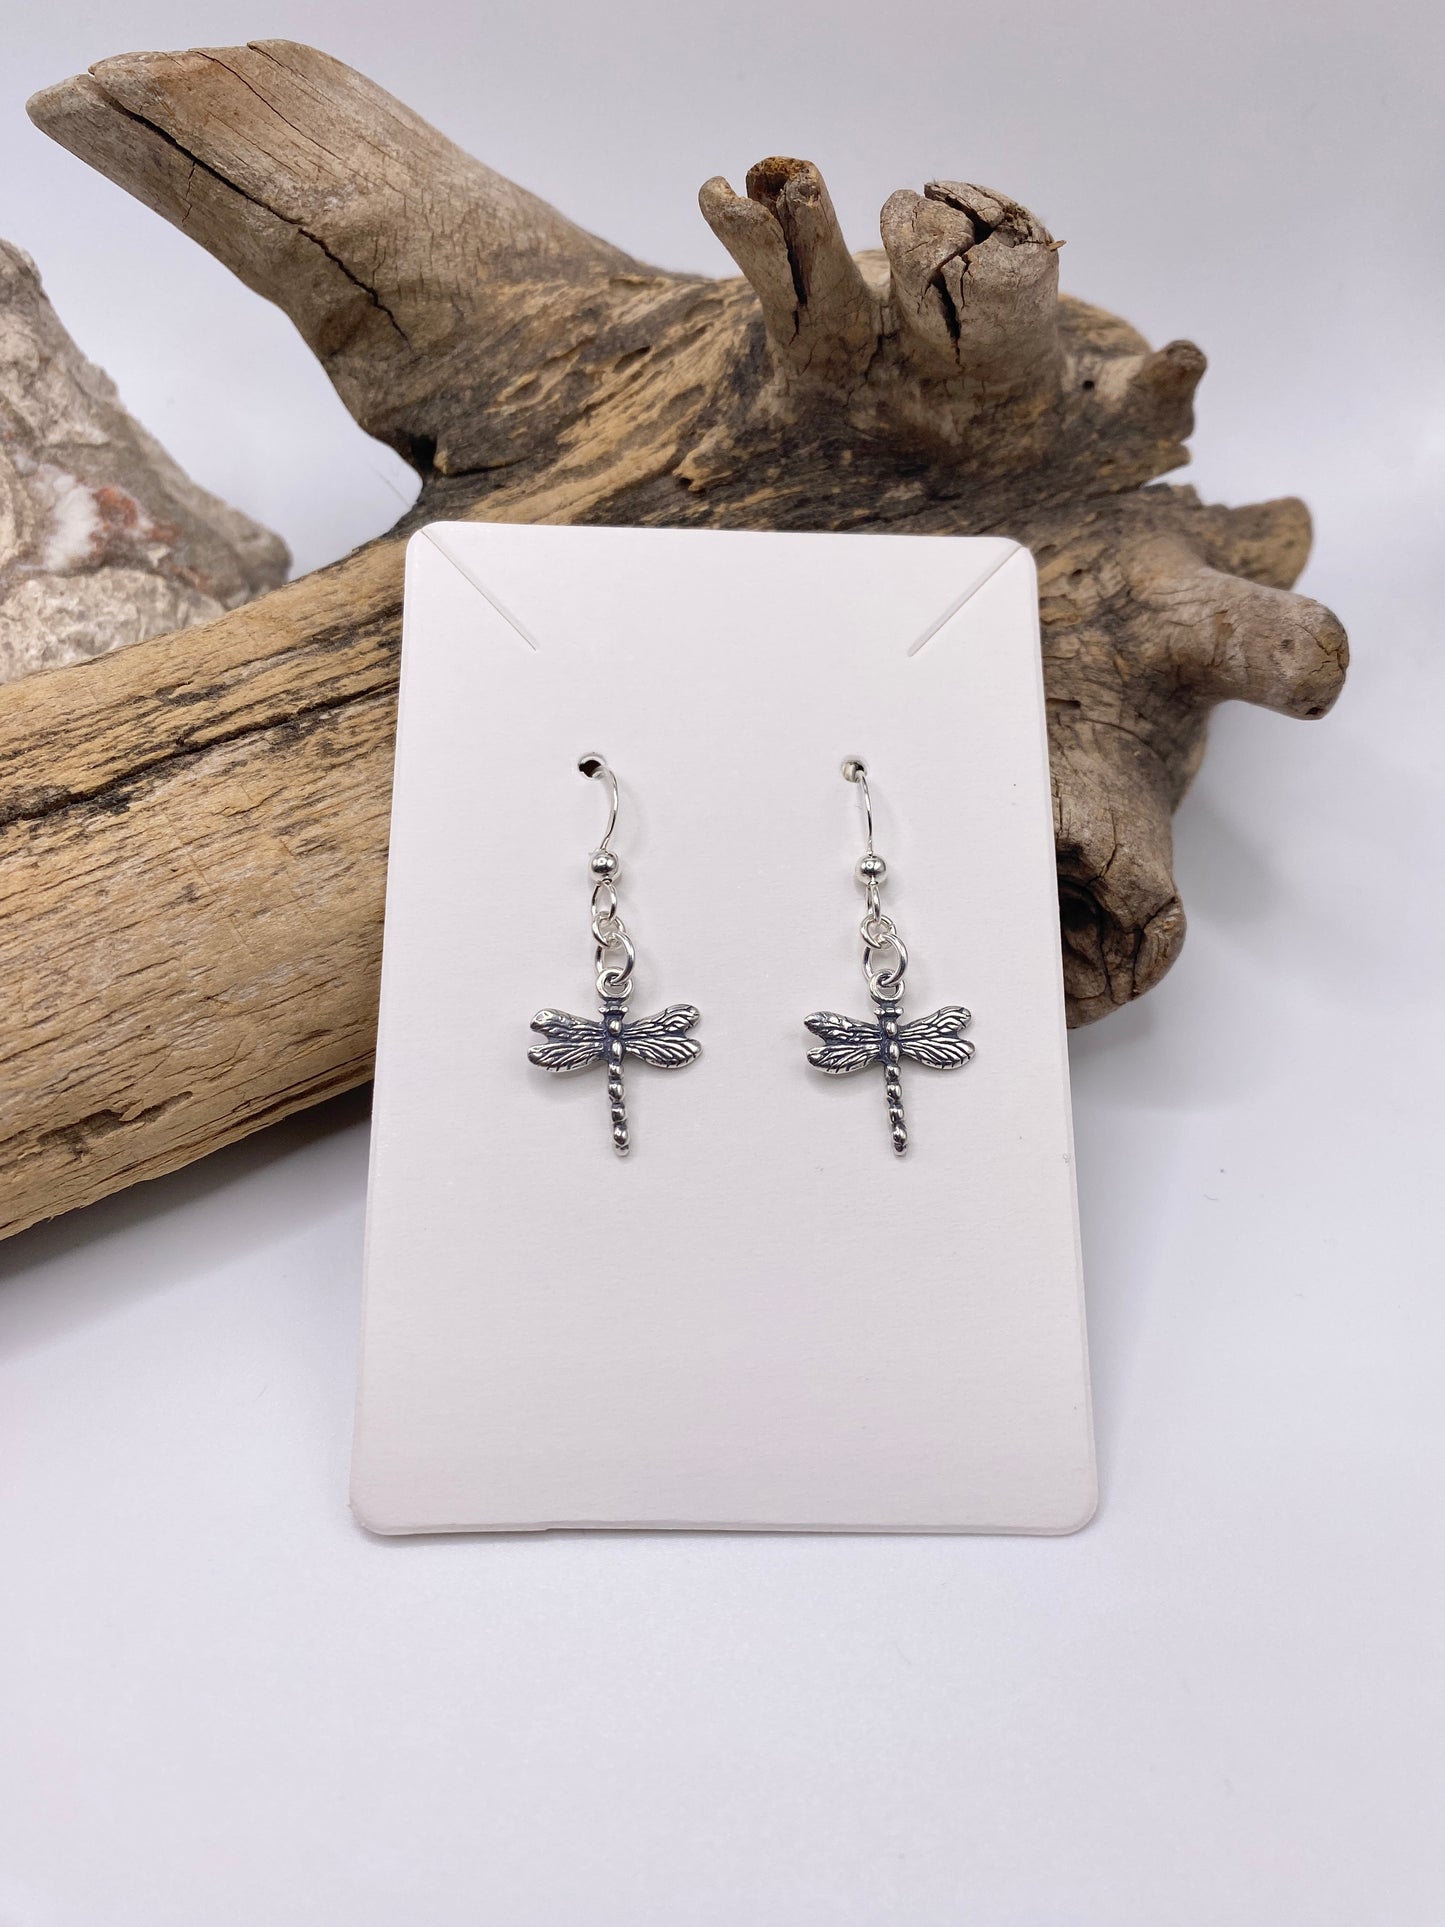 Dragonfly Charm Earrings in Sterling Silver